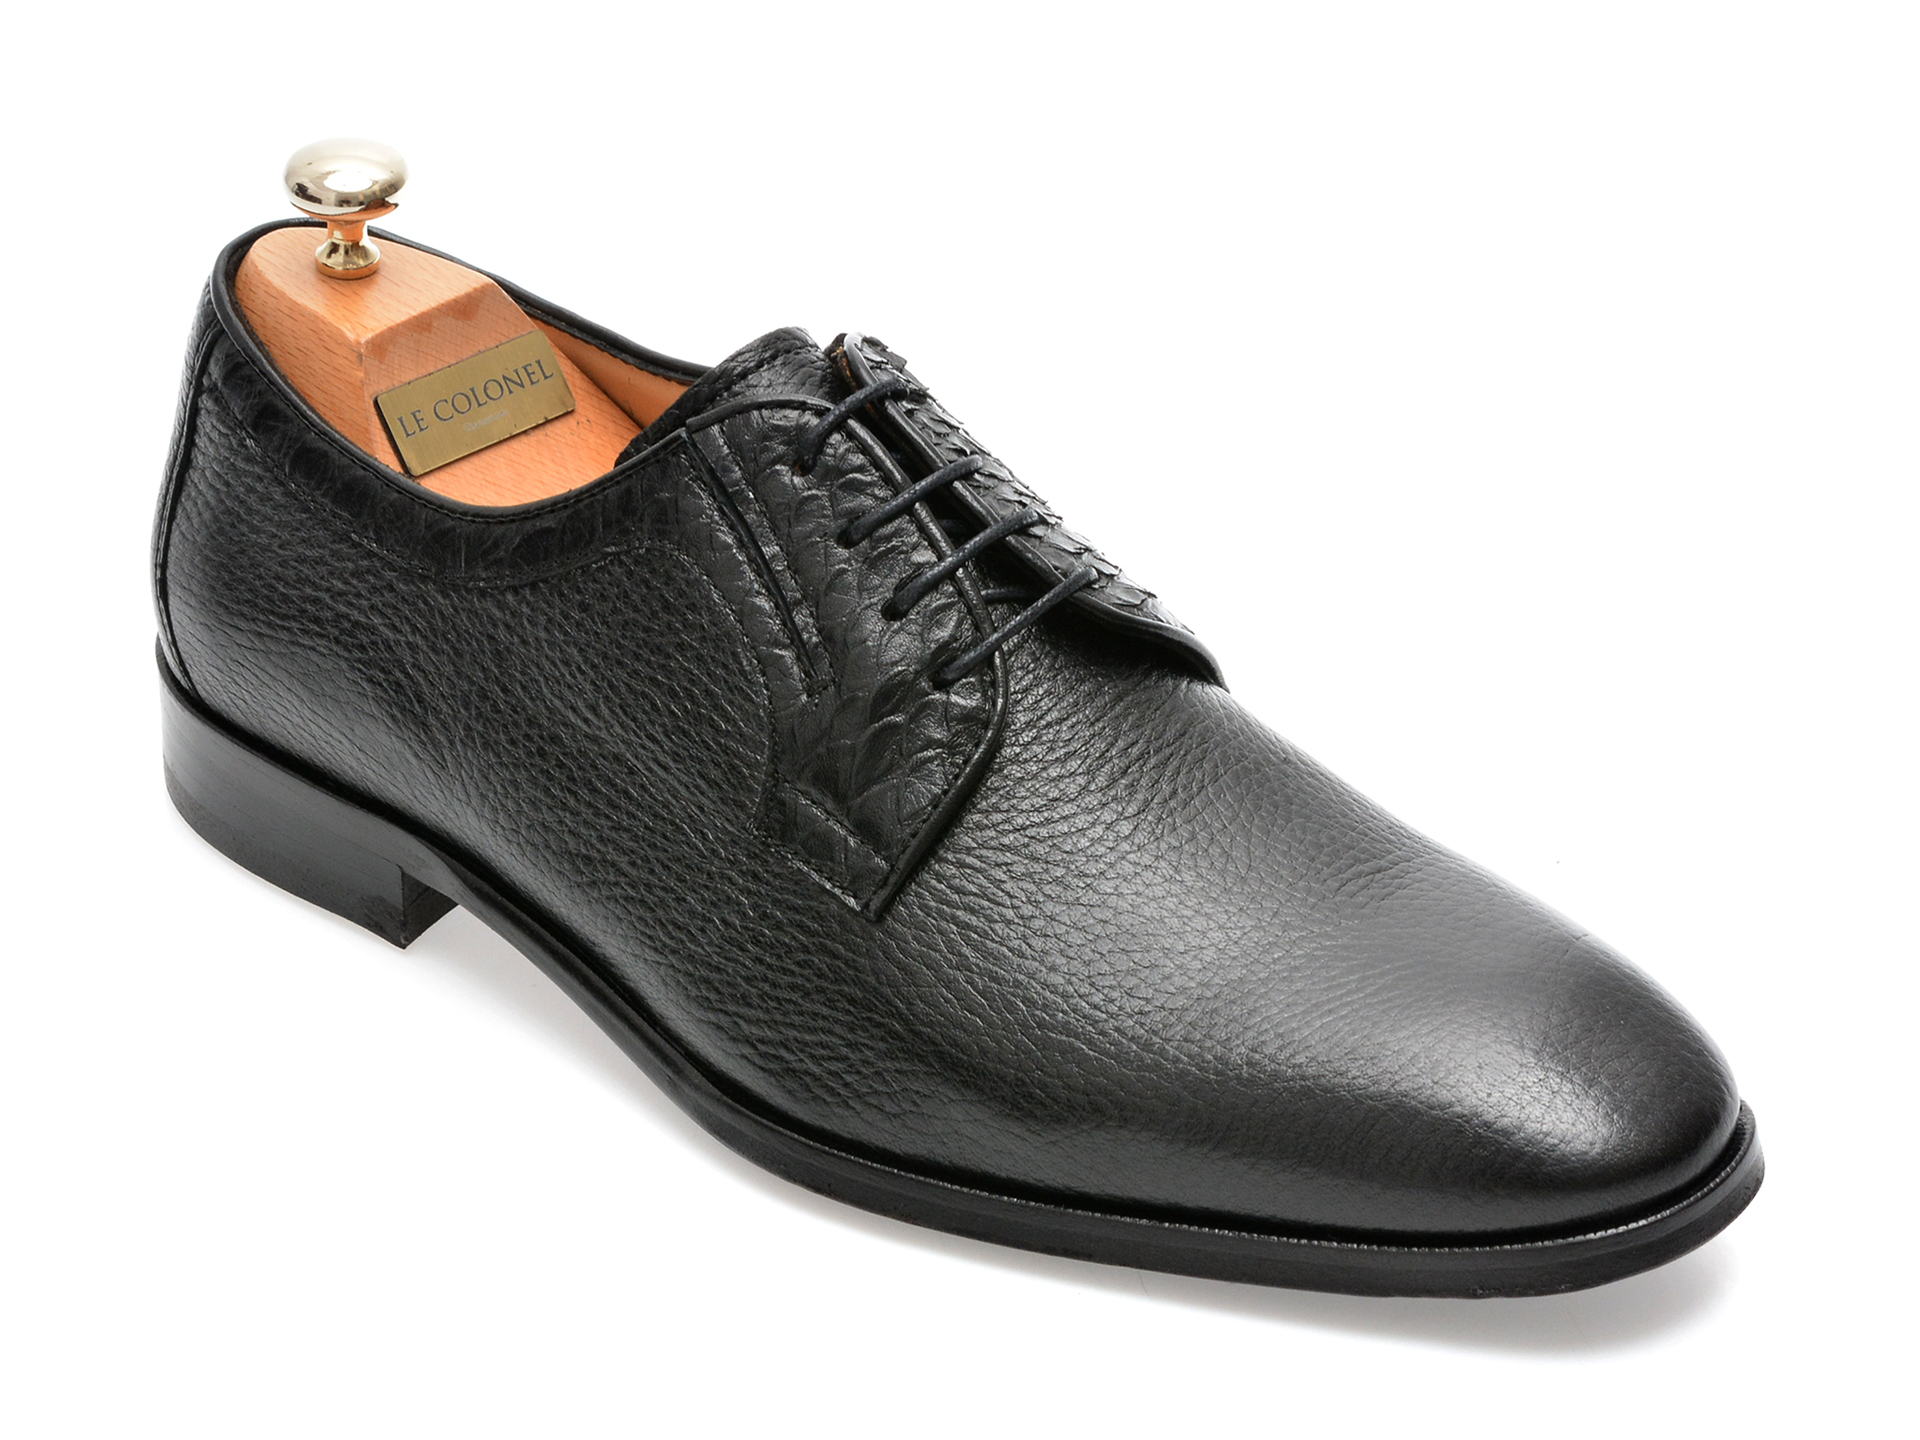 Pantofi LE COLONEL negri, 48711, din piele naturala /barbati/pantofi